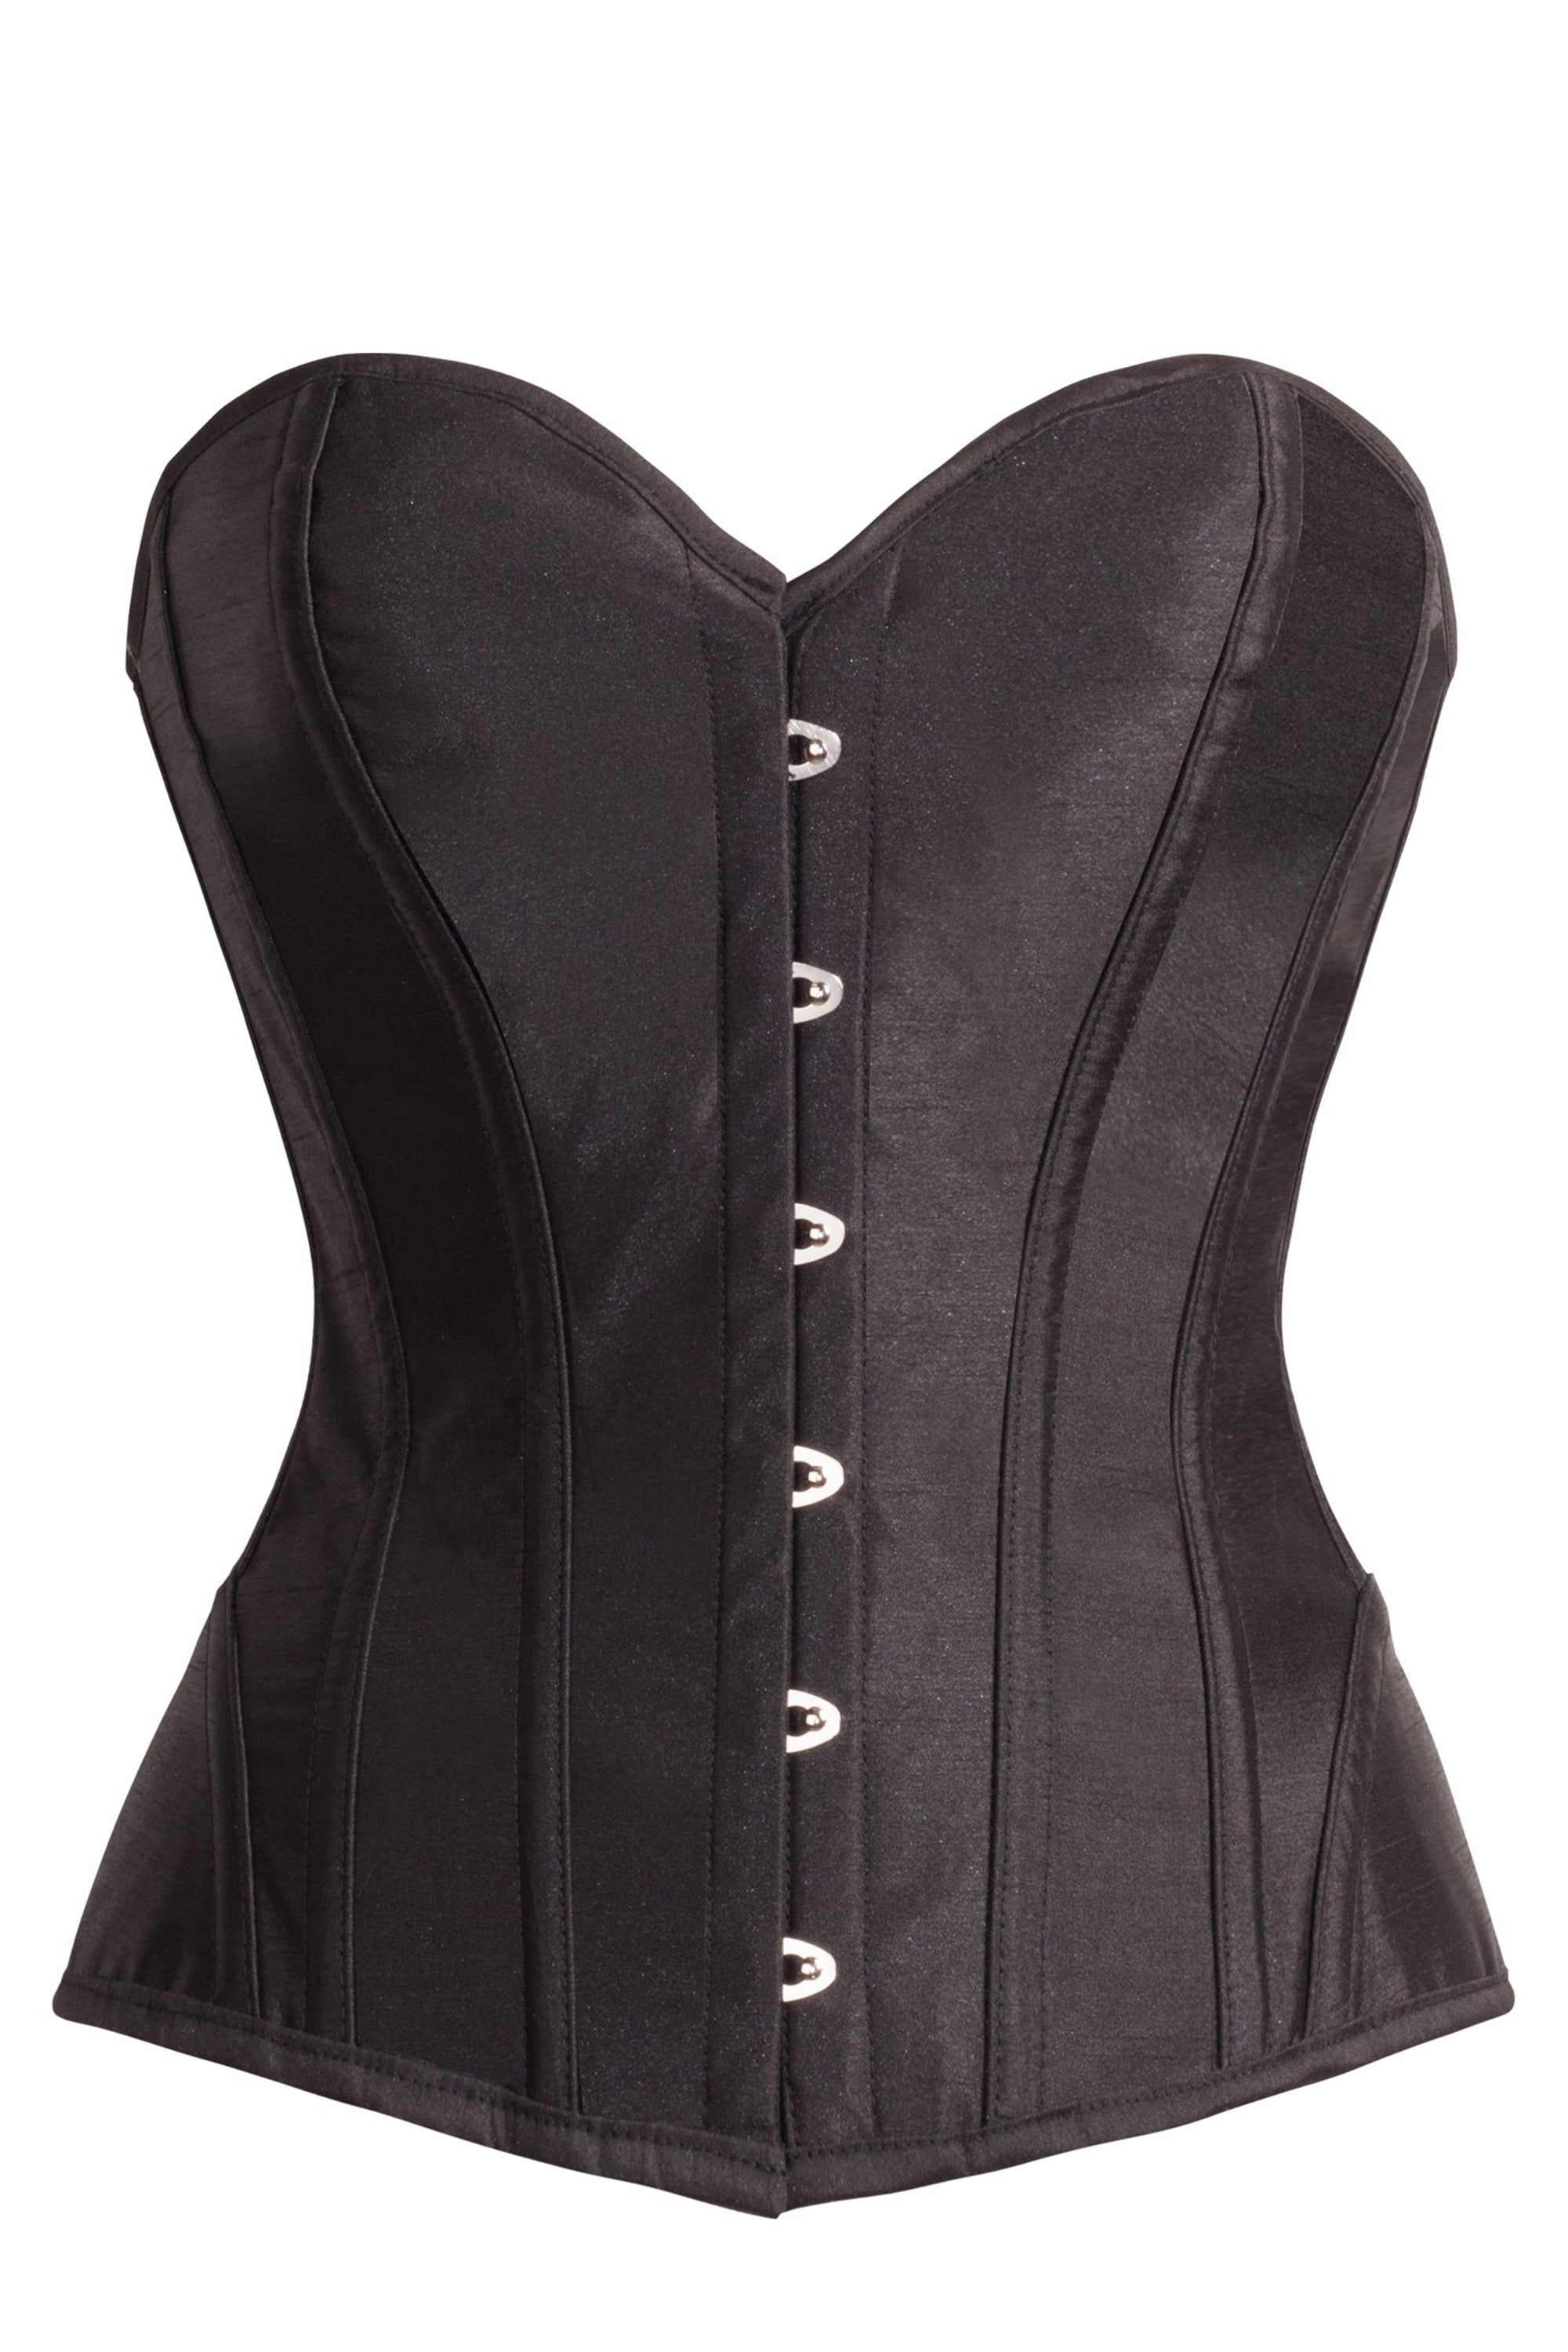 Black PVC Classic Overbust Corset  Overbust corset, Corset, Strapless  dress formal